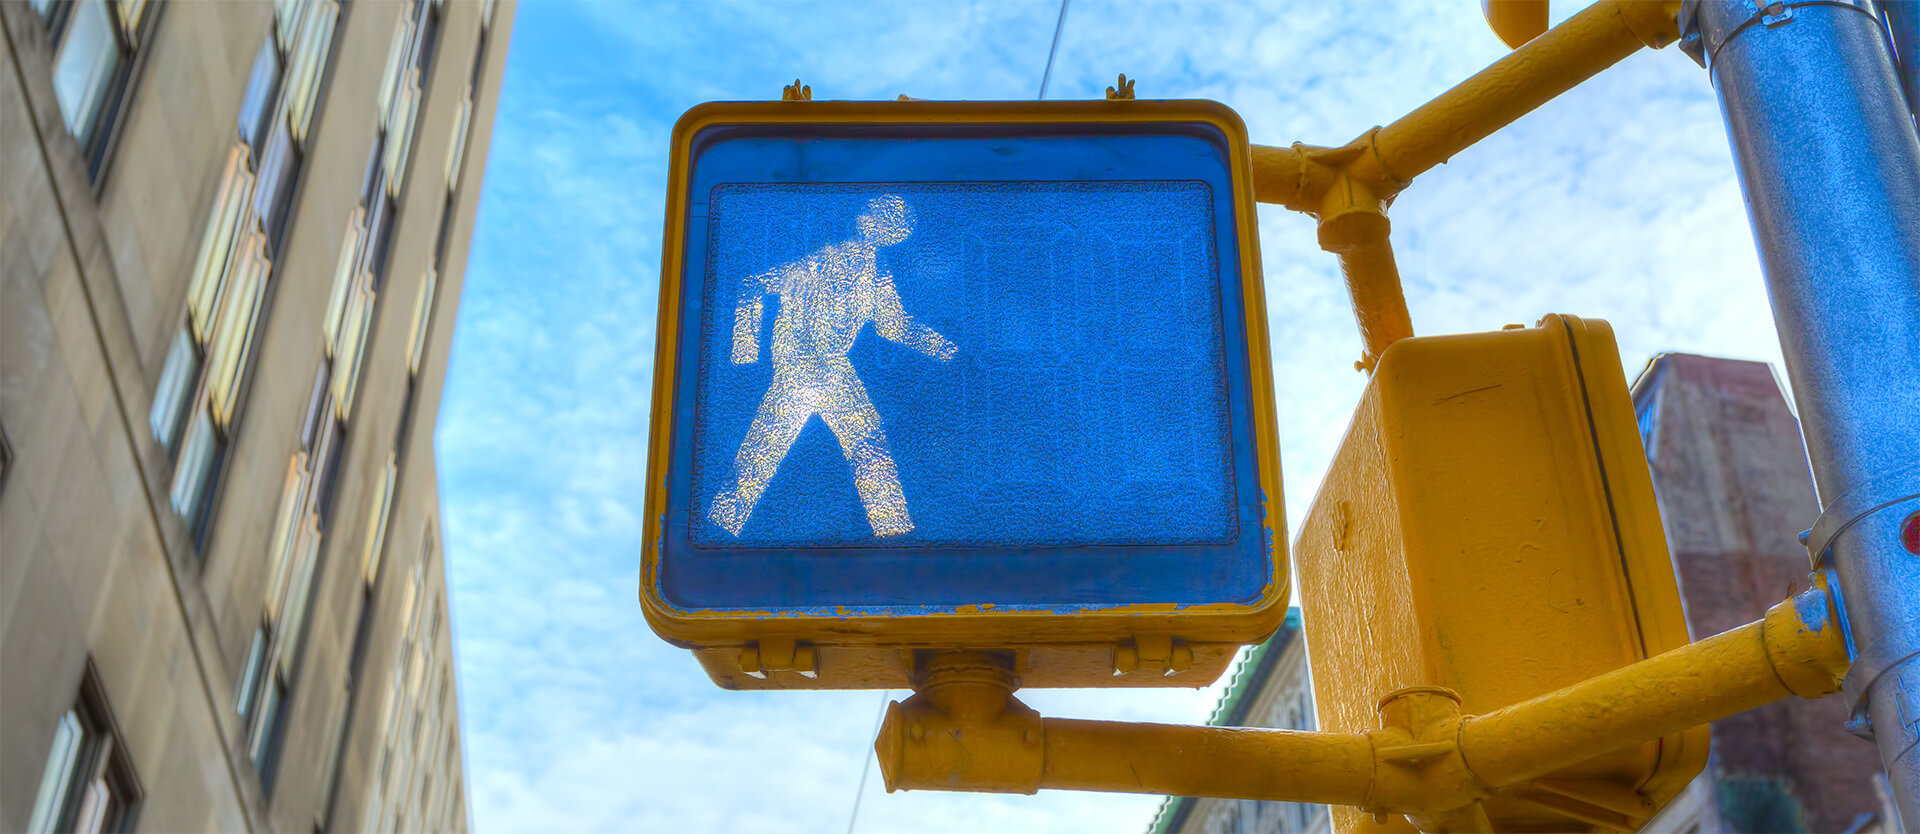 pedestrian crossing stoplight